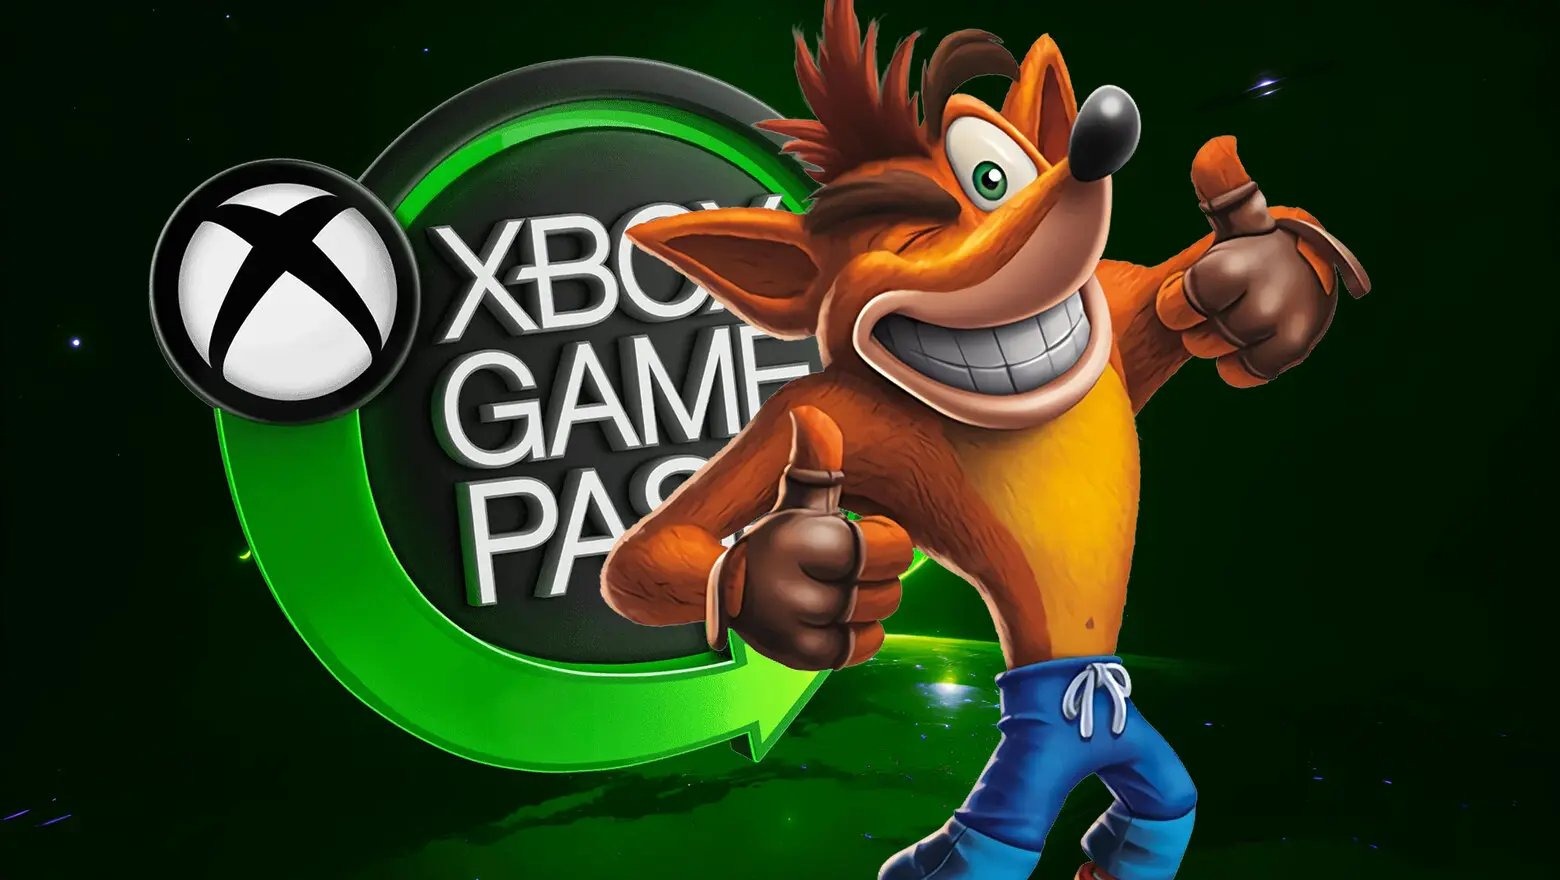 Tags: Crash Bandicoot N. Sane Trilogy Comes to Xbox Game Pass